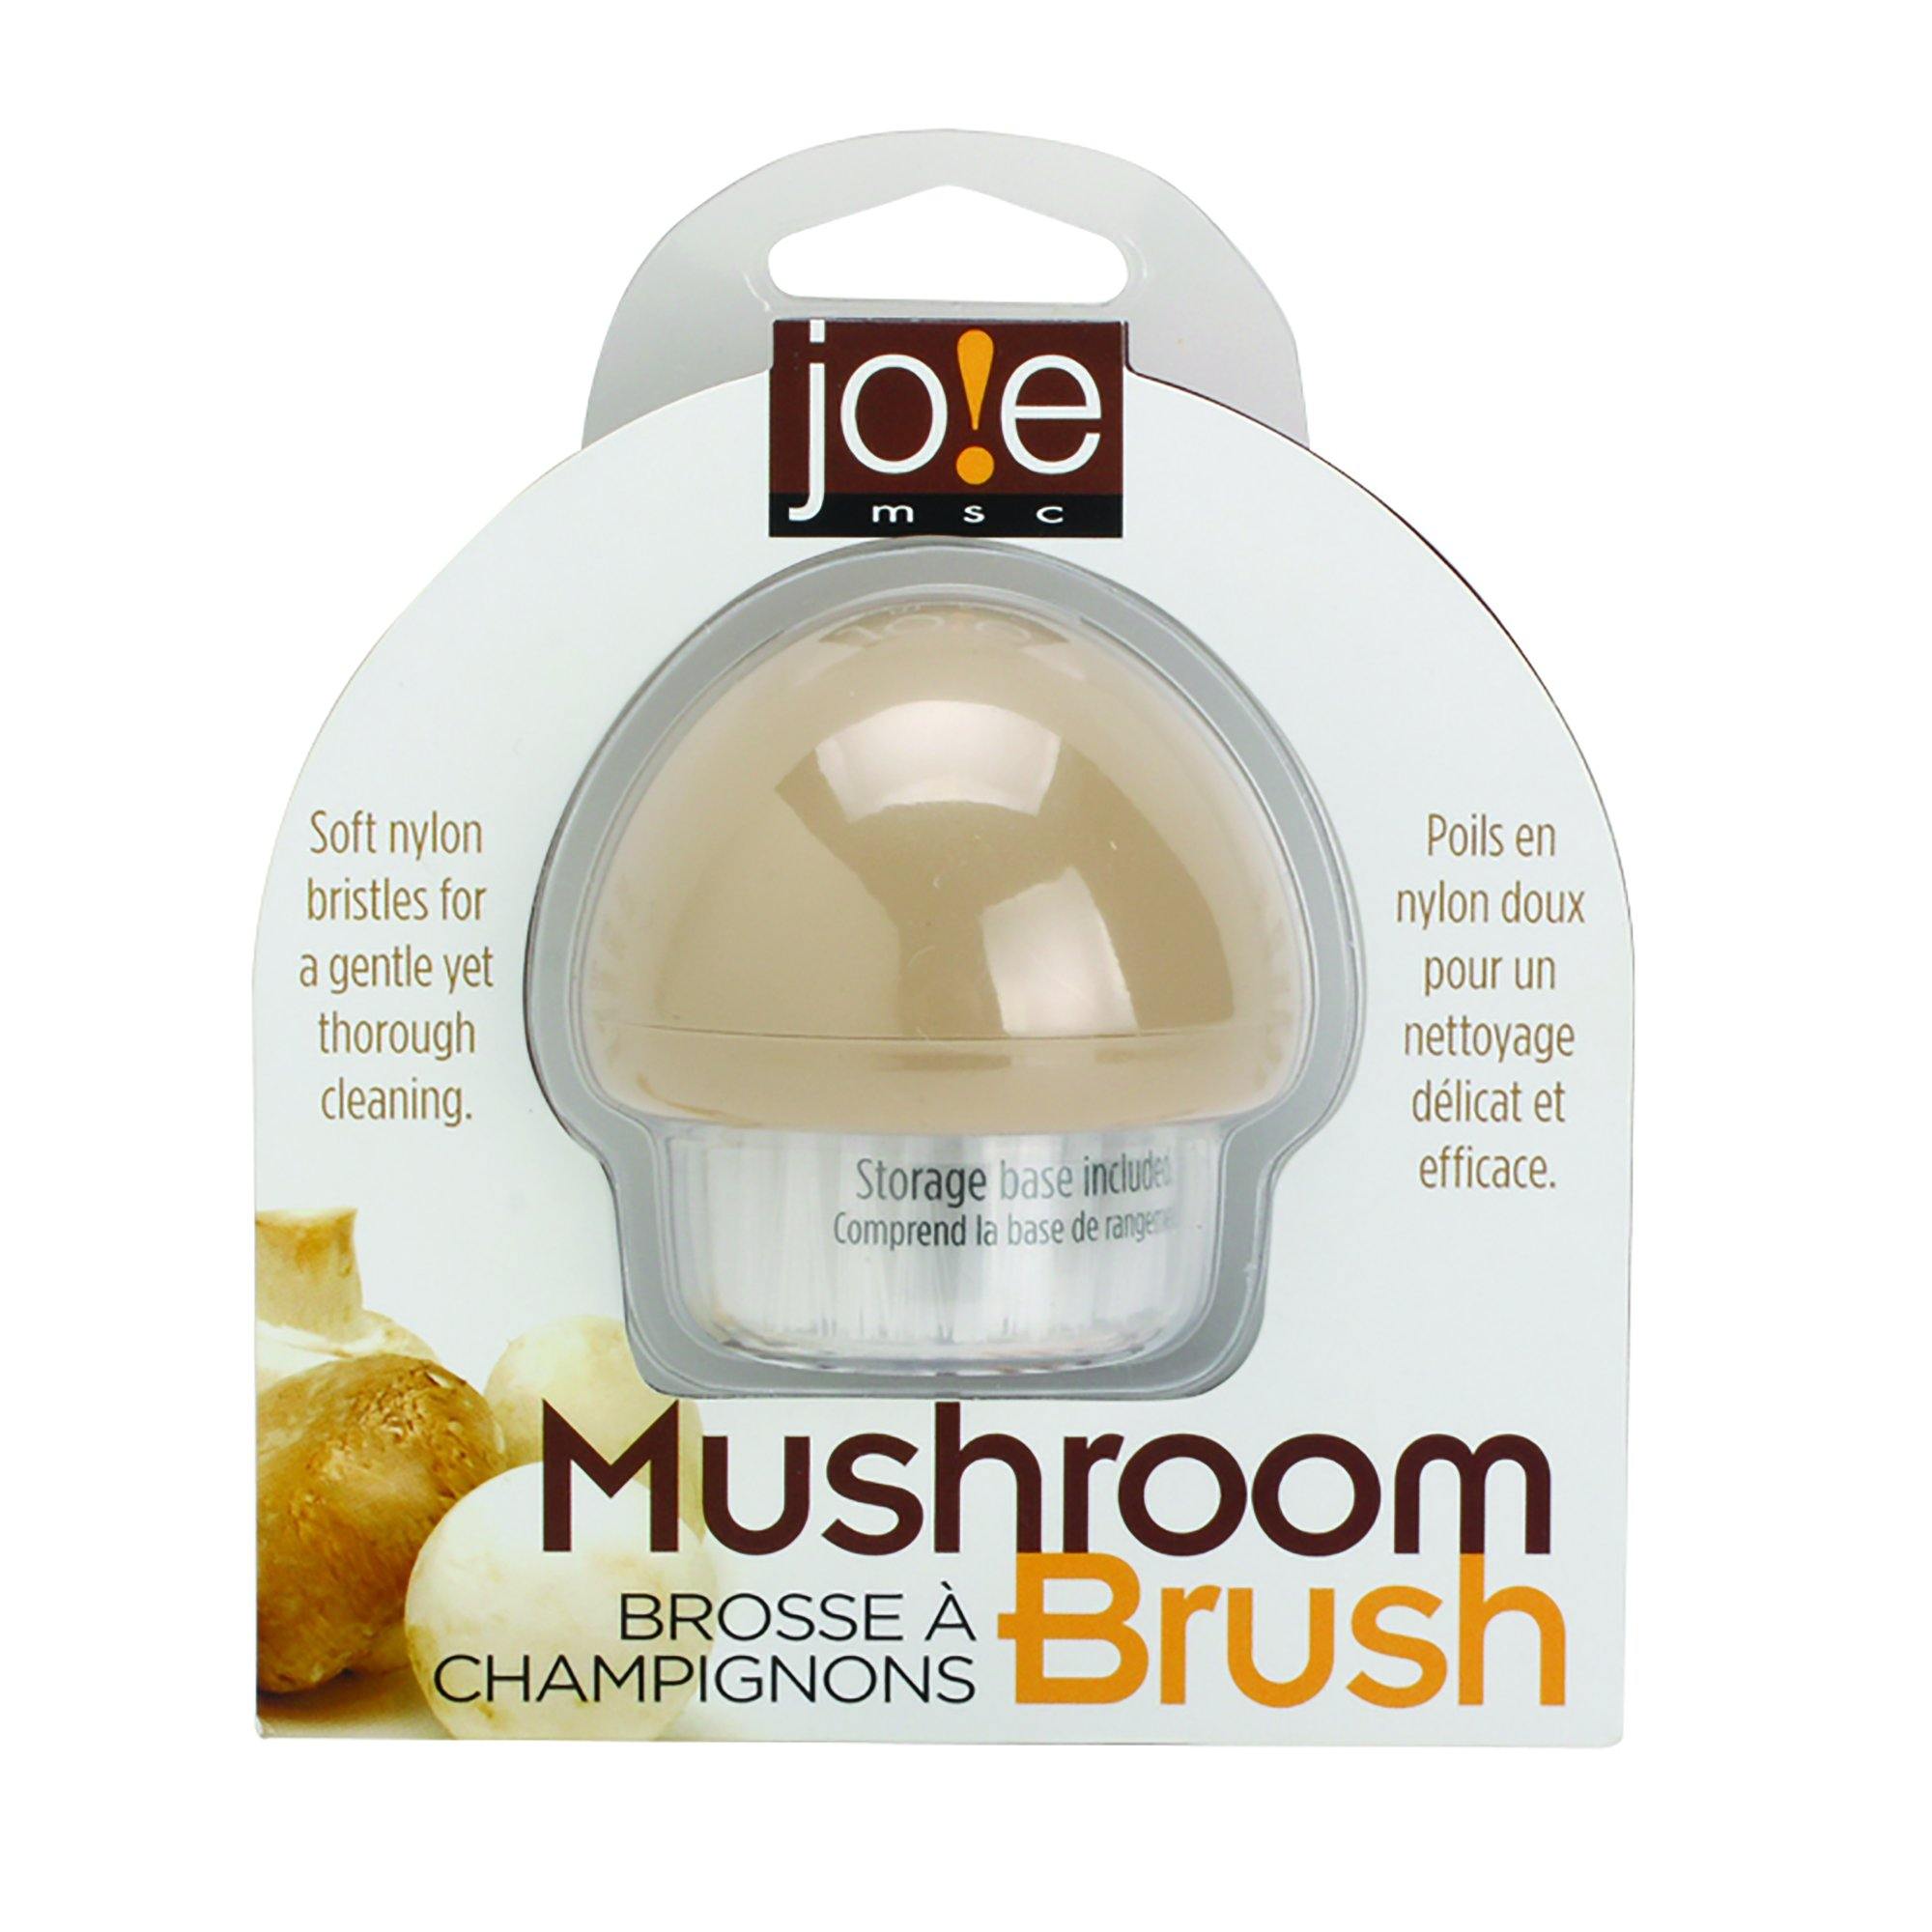 Joie MSC Mushroom Brush - Dollar Max Depot